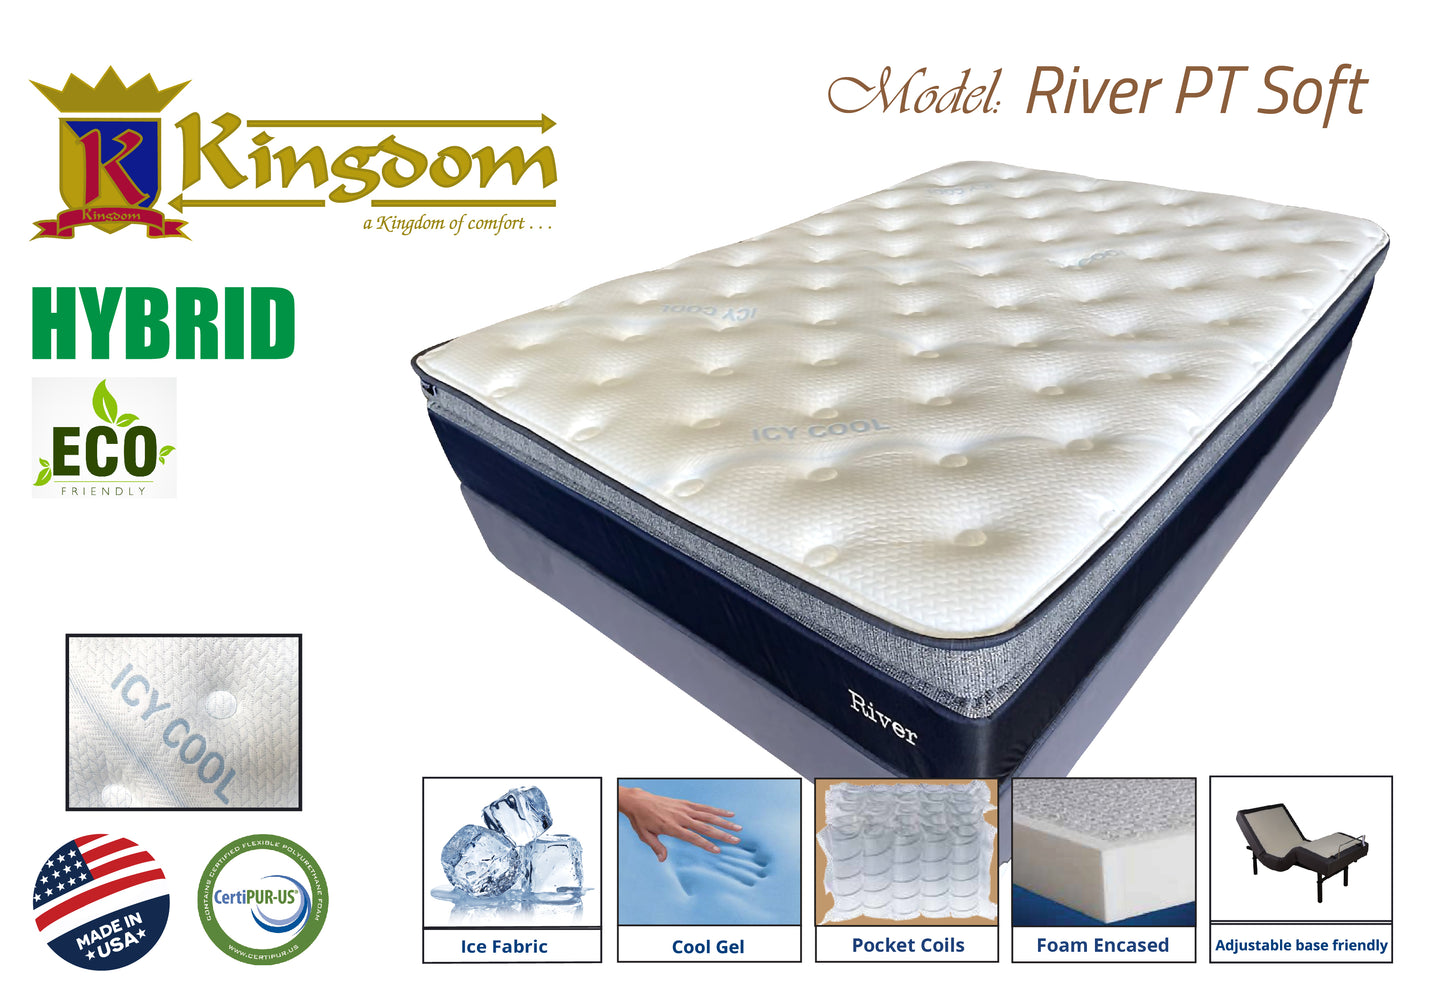 Kingdom River Pillow Top Mattress 13"